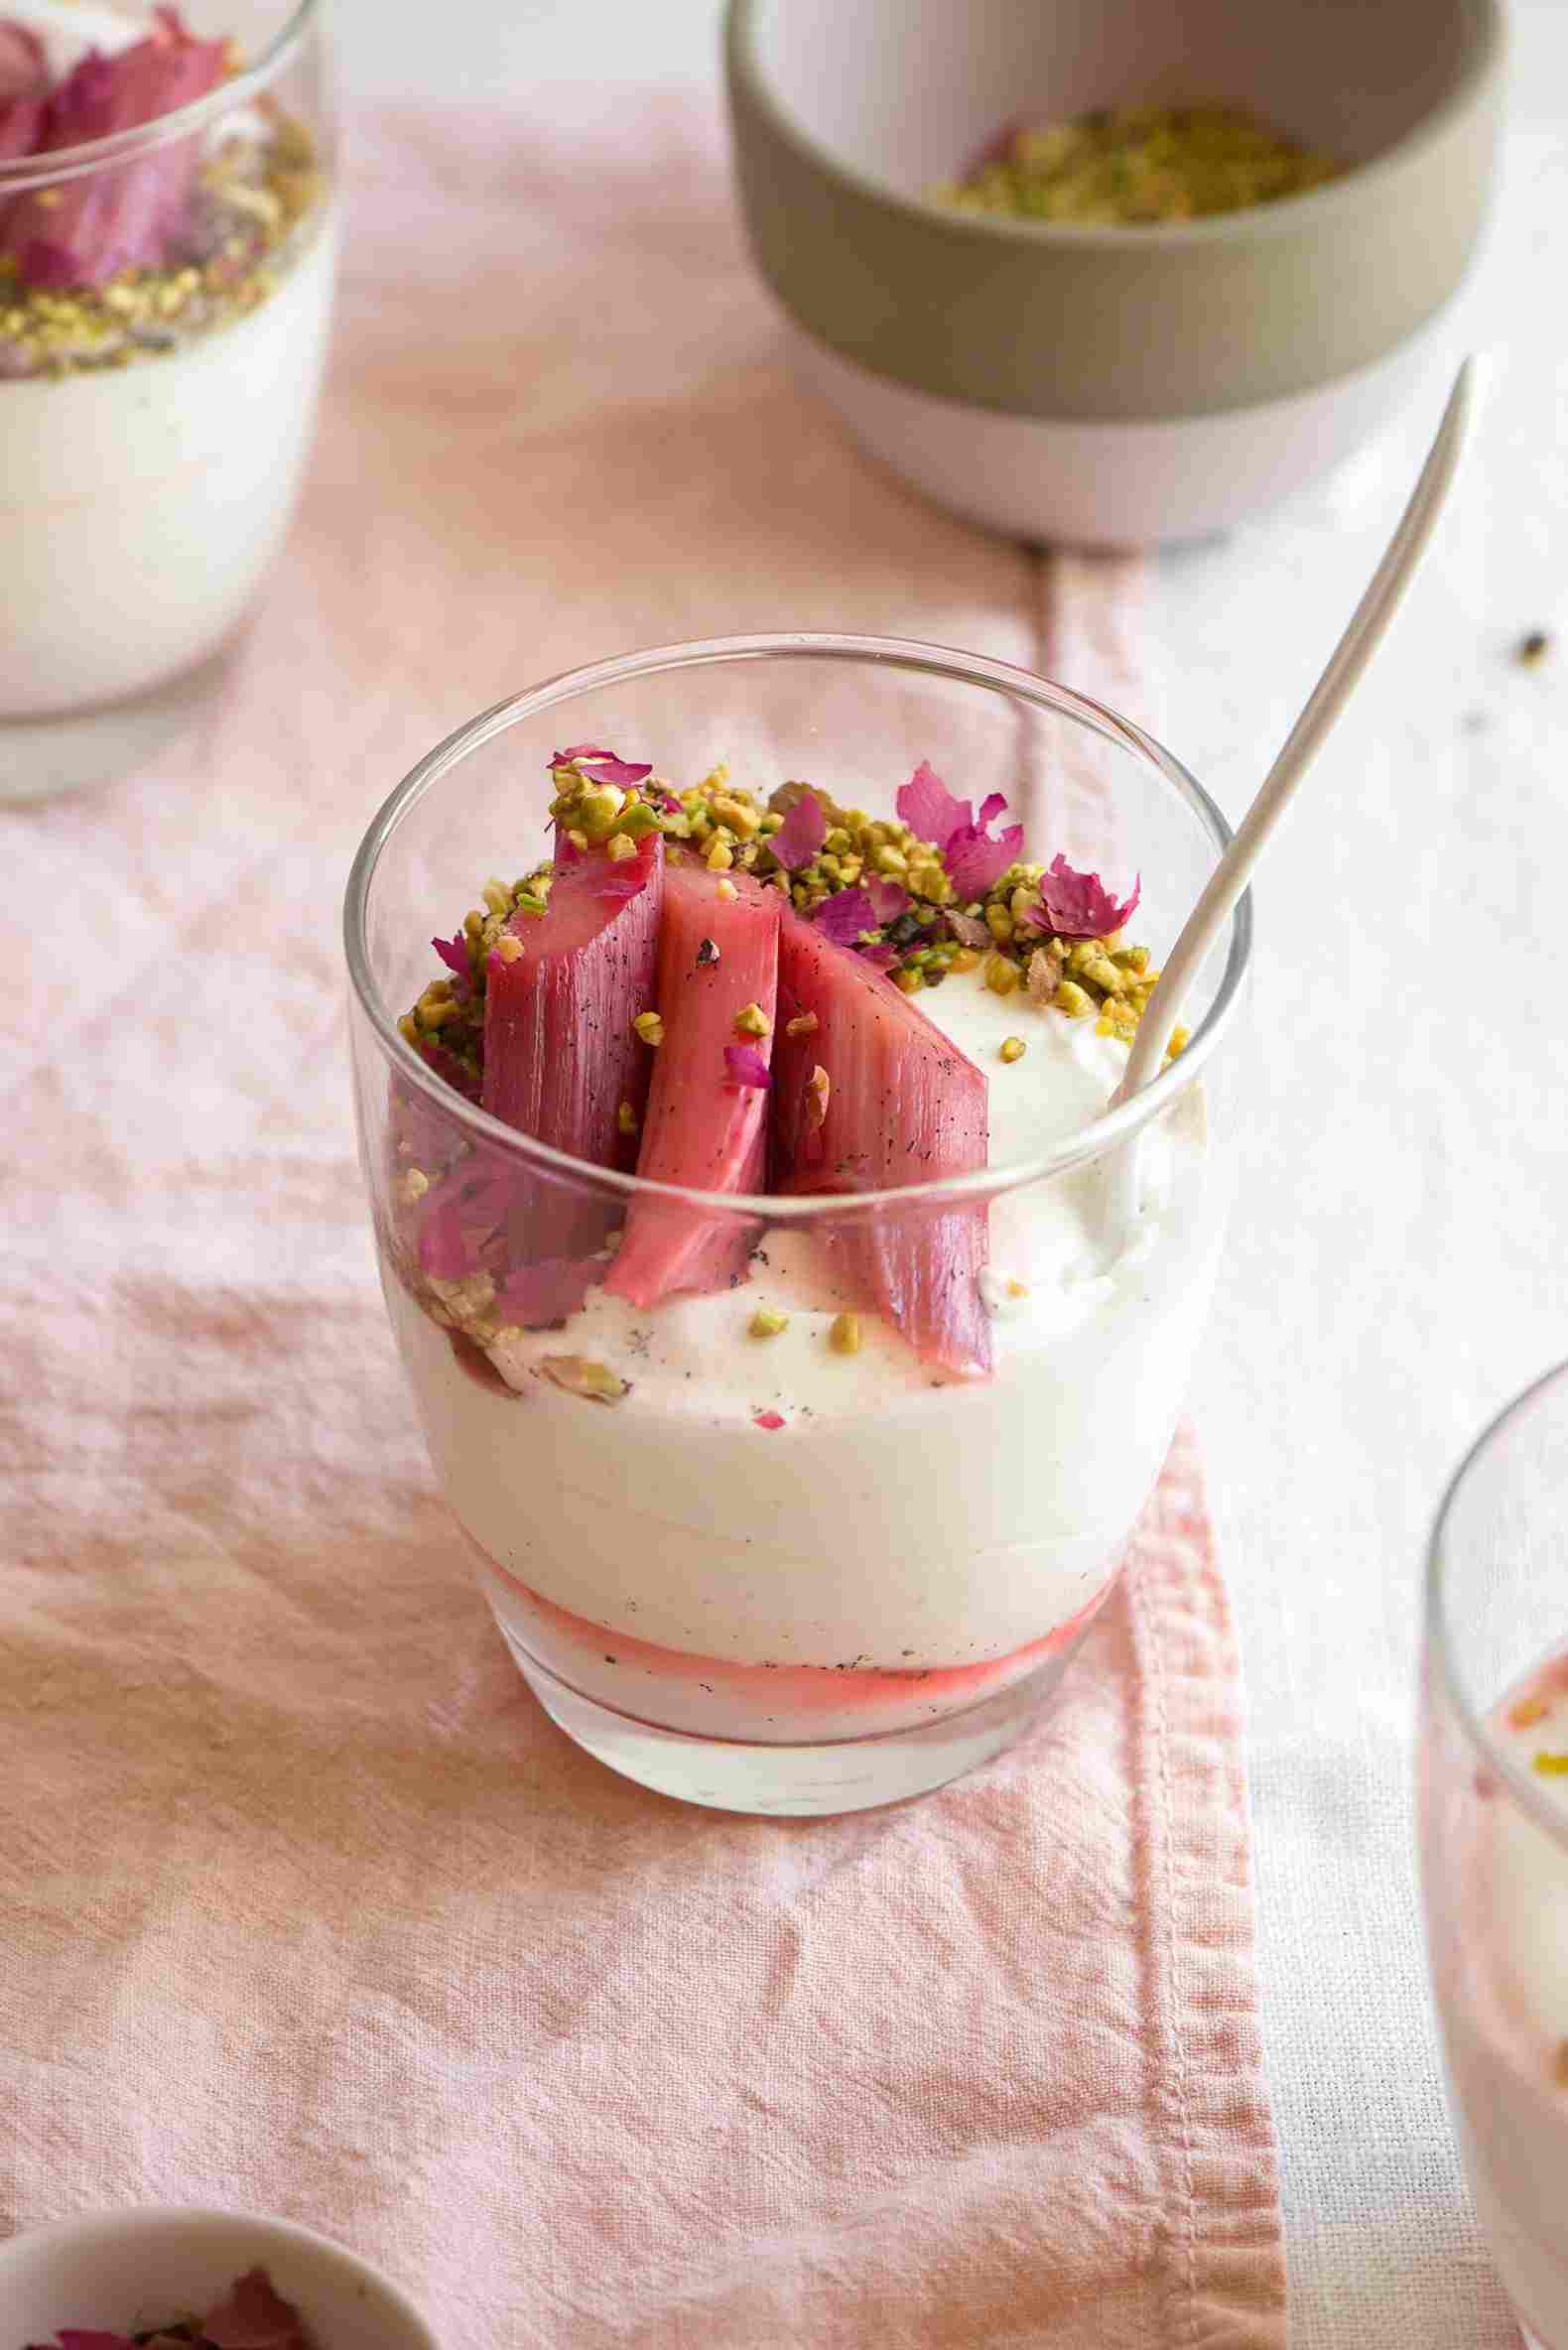 Rhubarb cake recipe in glass simple strawberry pistachio dessert